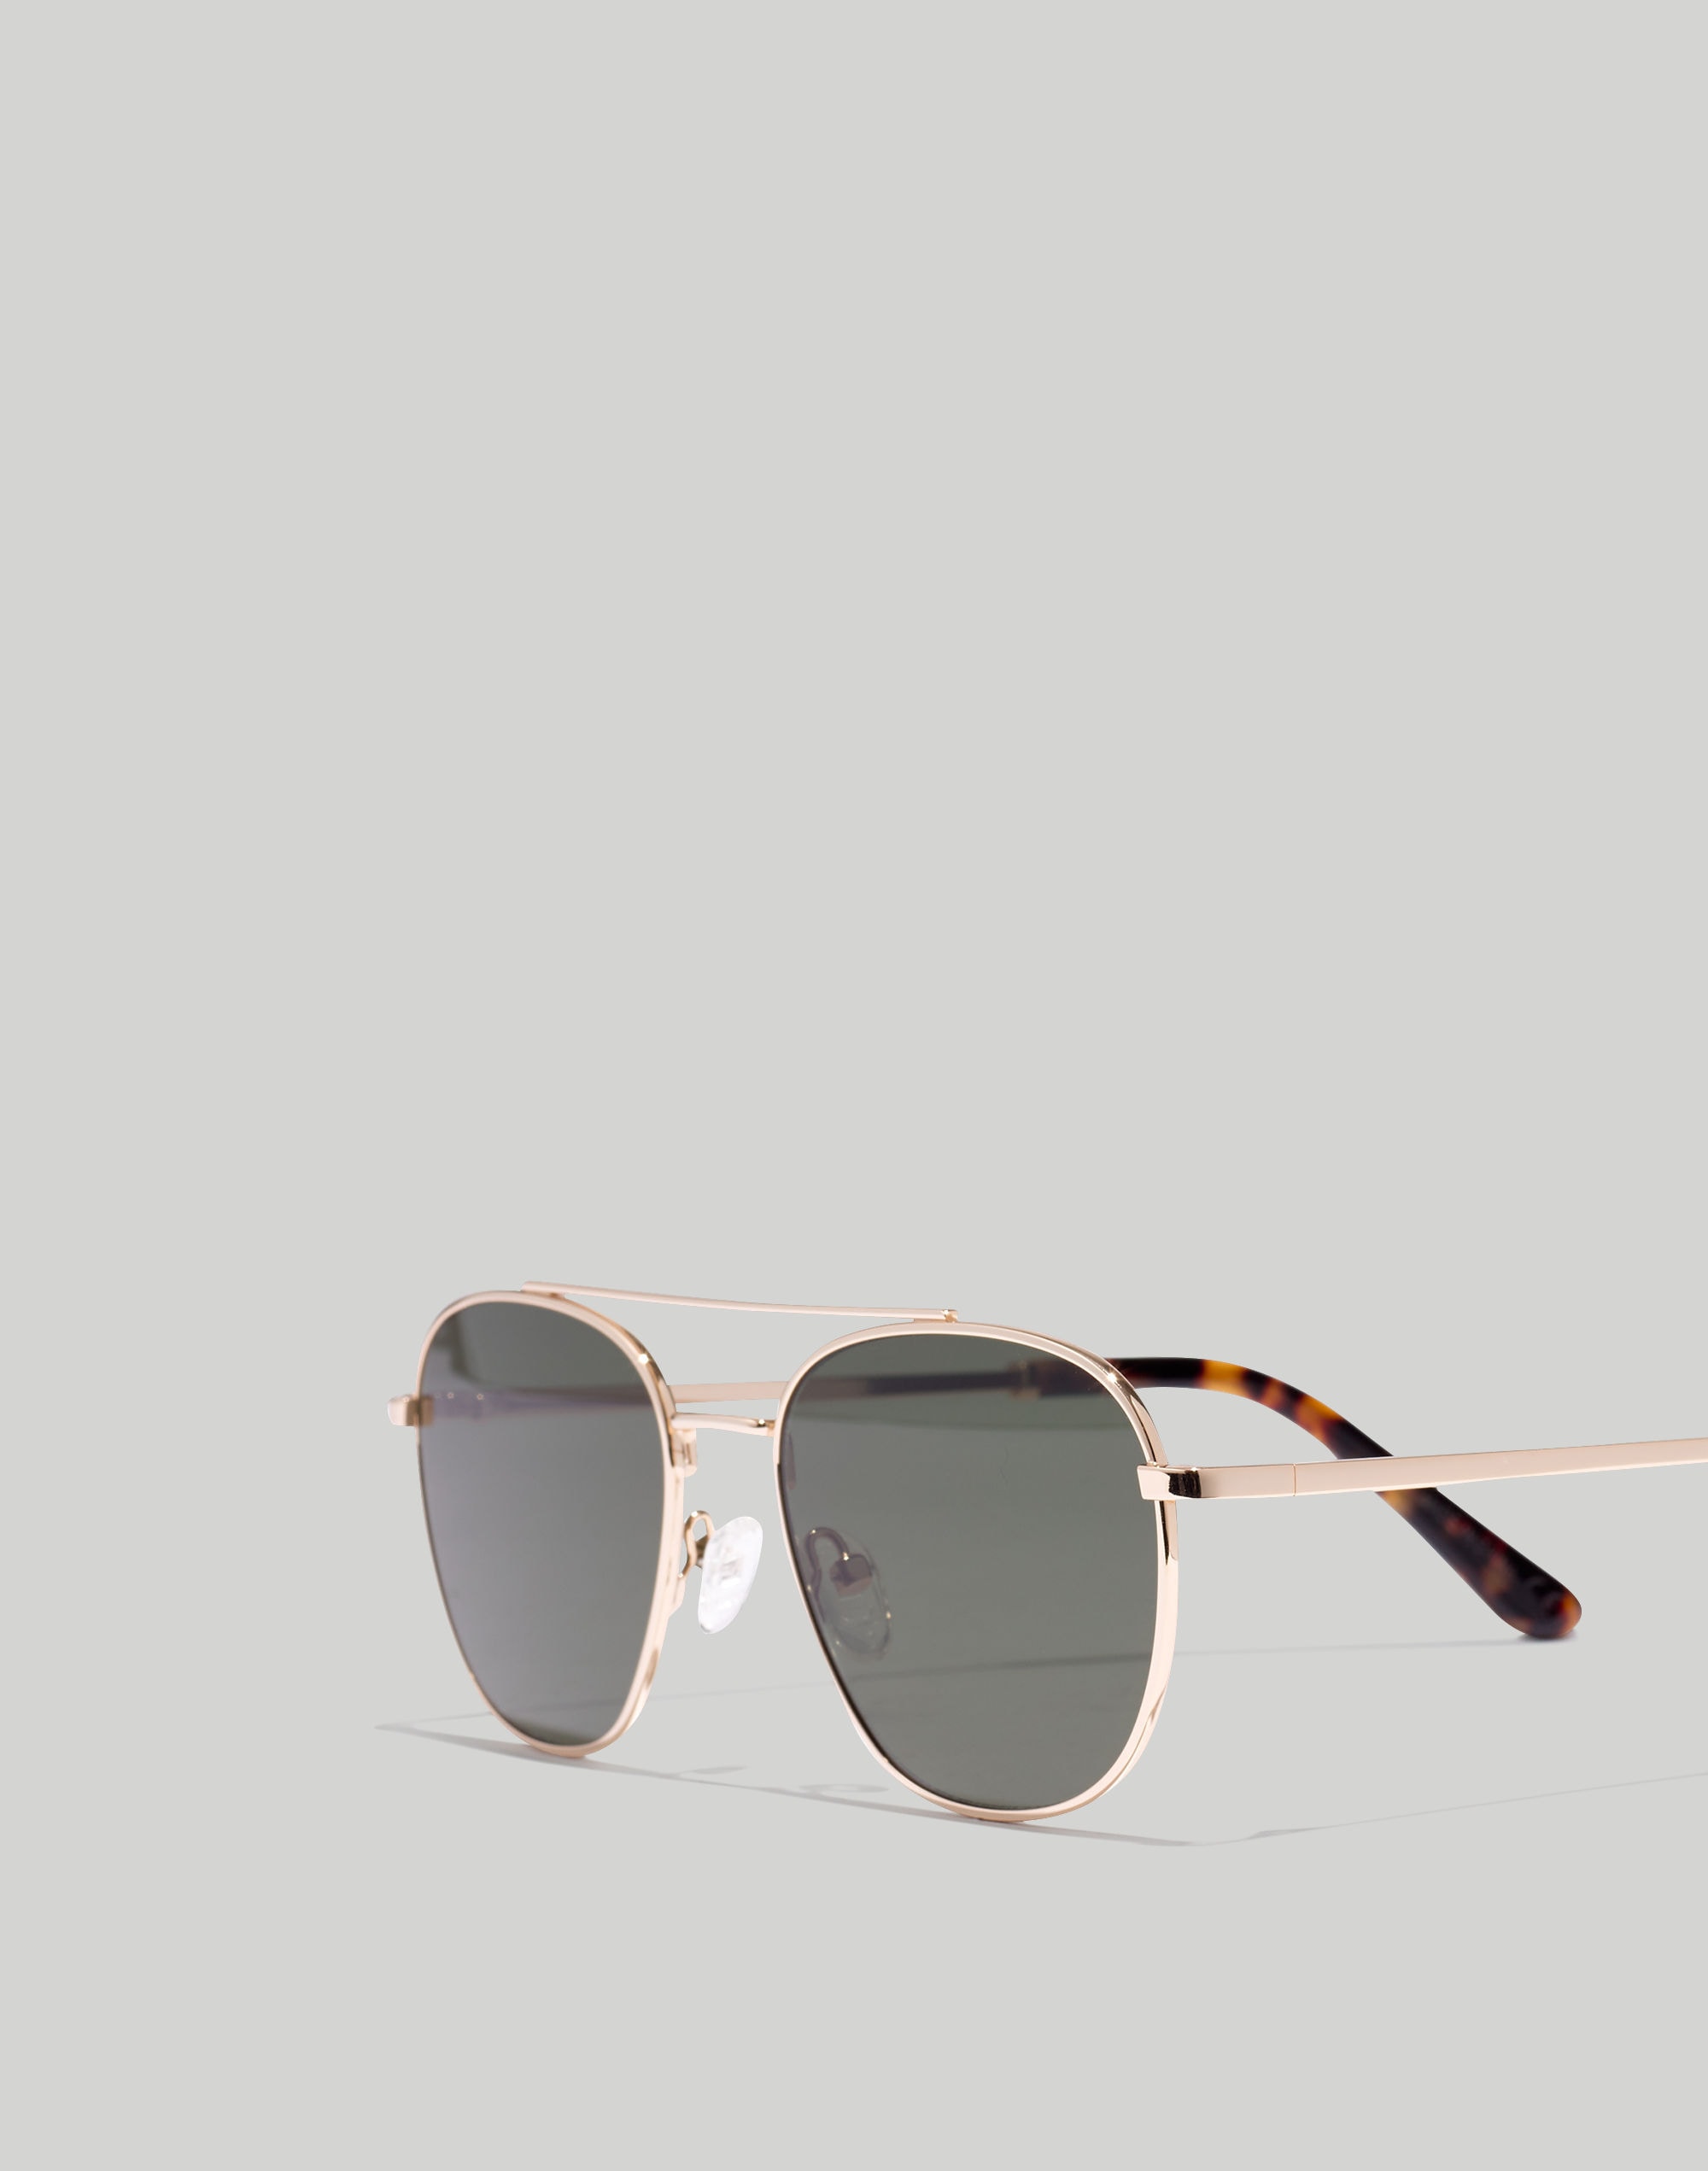 Madewell Fest Aviator Sunglasses in True Black - Size One S